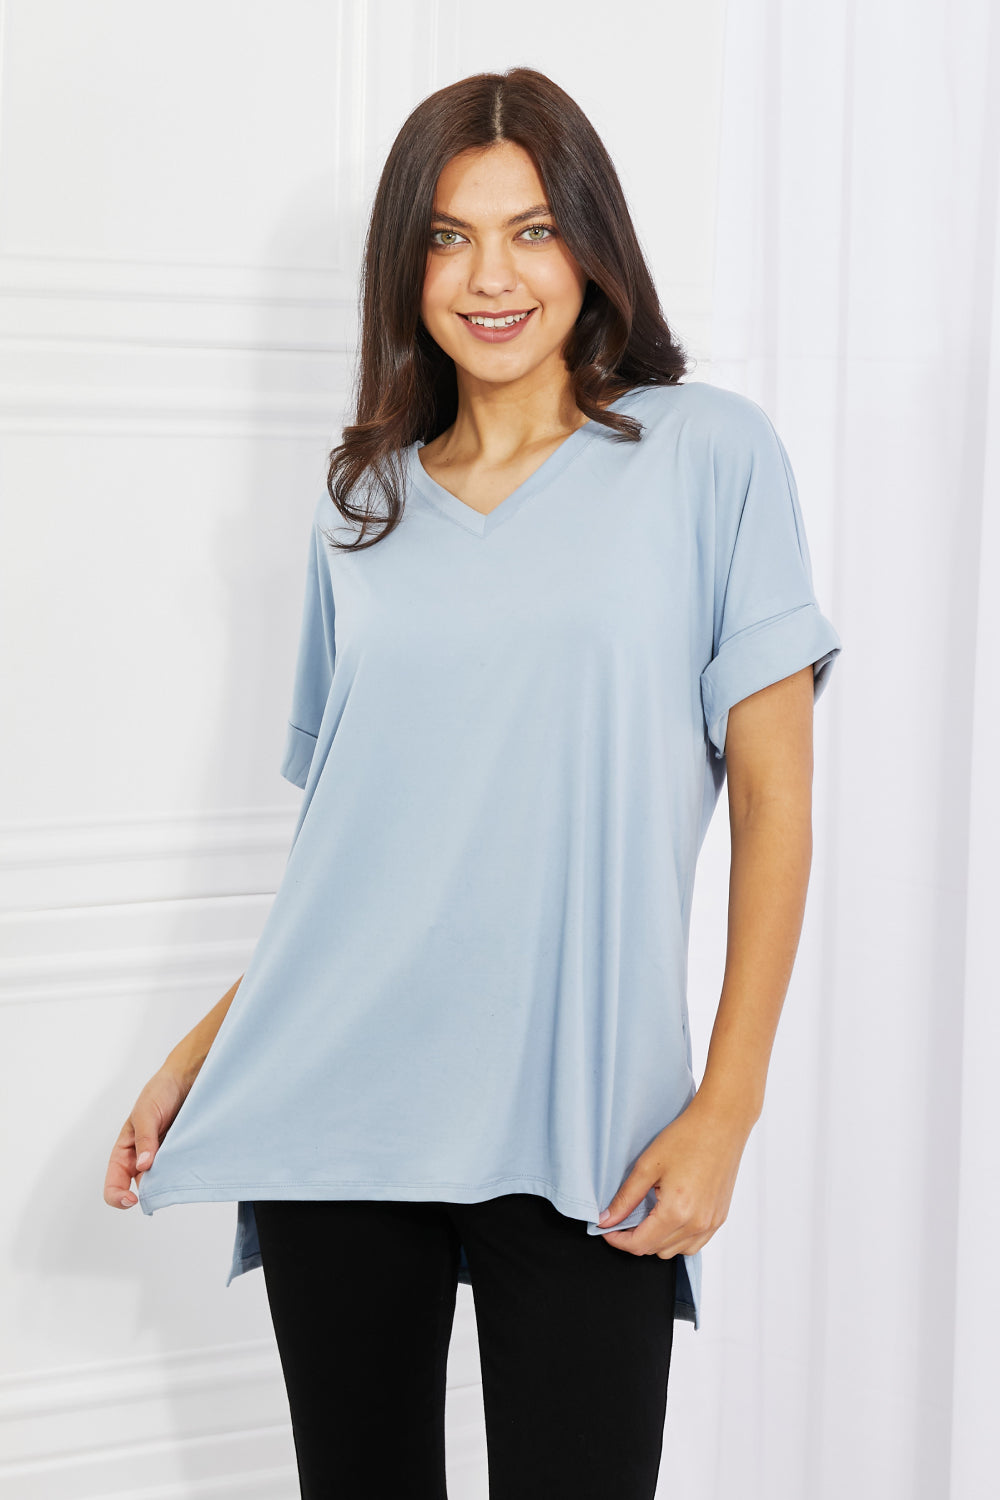 ZENANA Simply Comfy Full Size V-Neck Loose Fit T-Shirt in Misty Blue